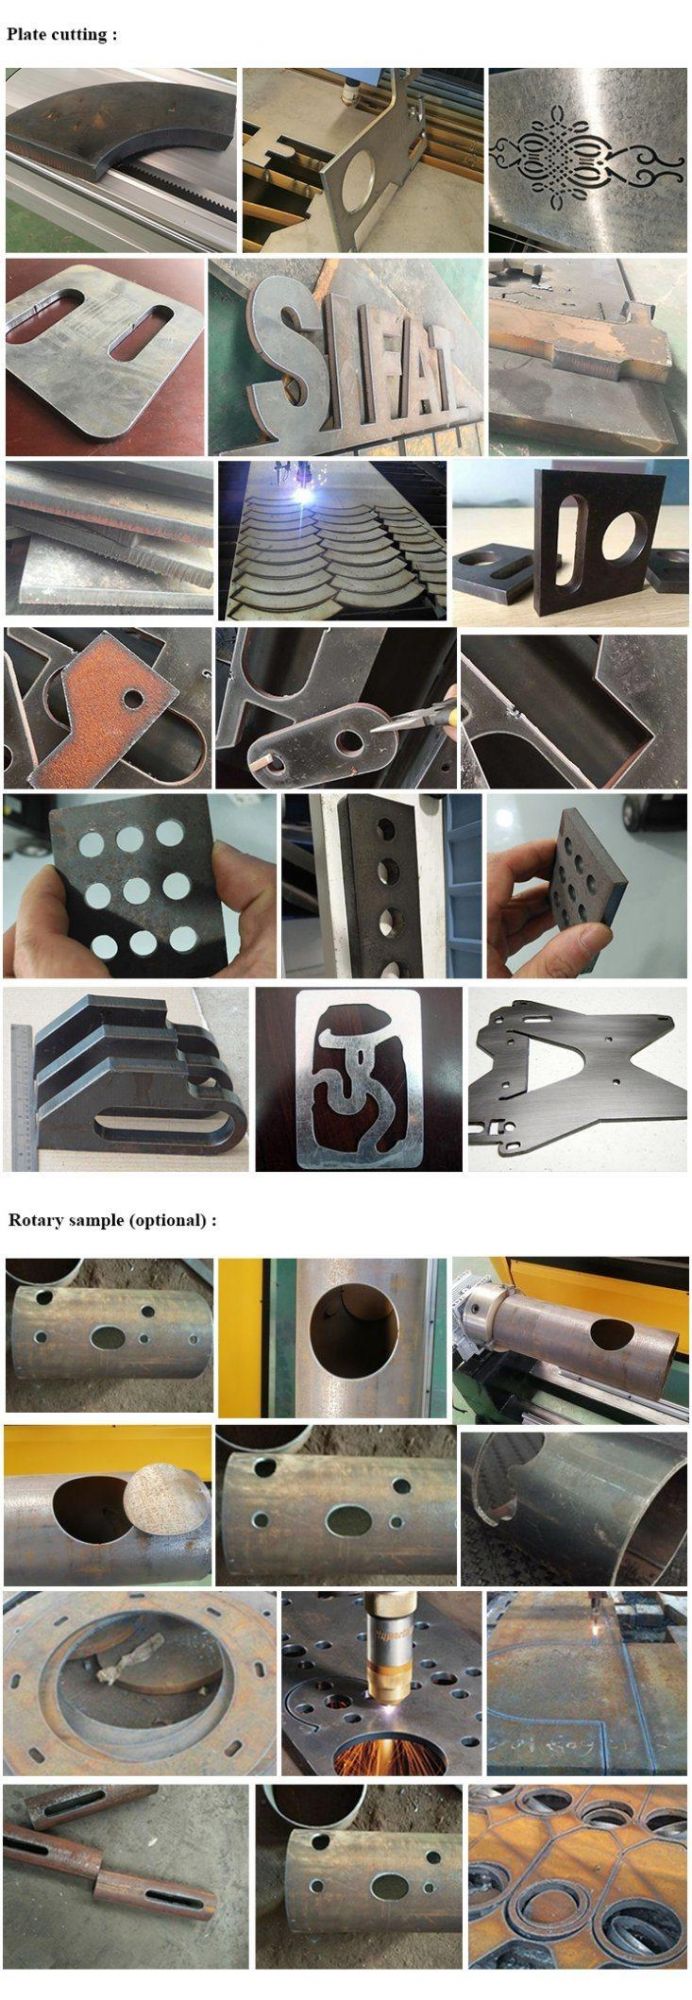 Cheap Chinese CNC Plasma Cutting Machine Steel Cutting Machine Plasma CNC Cutter Machine